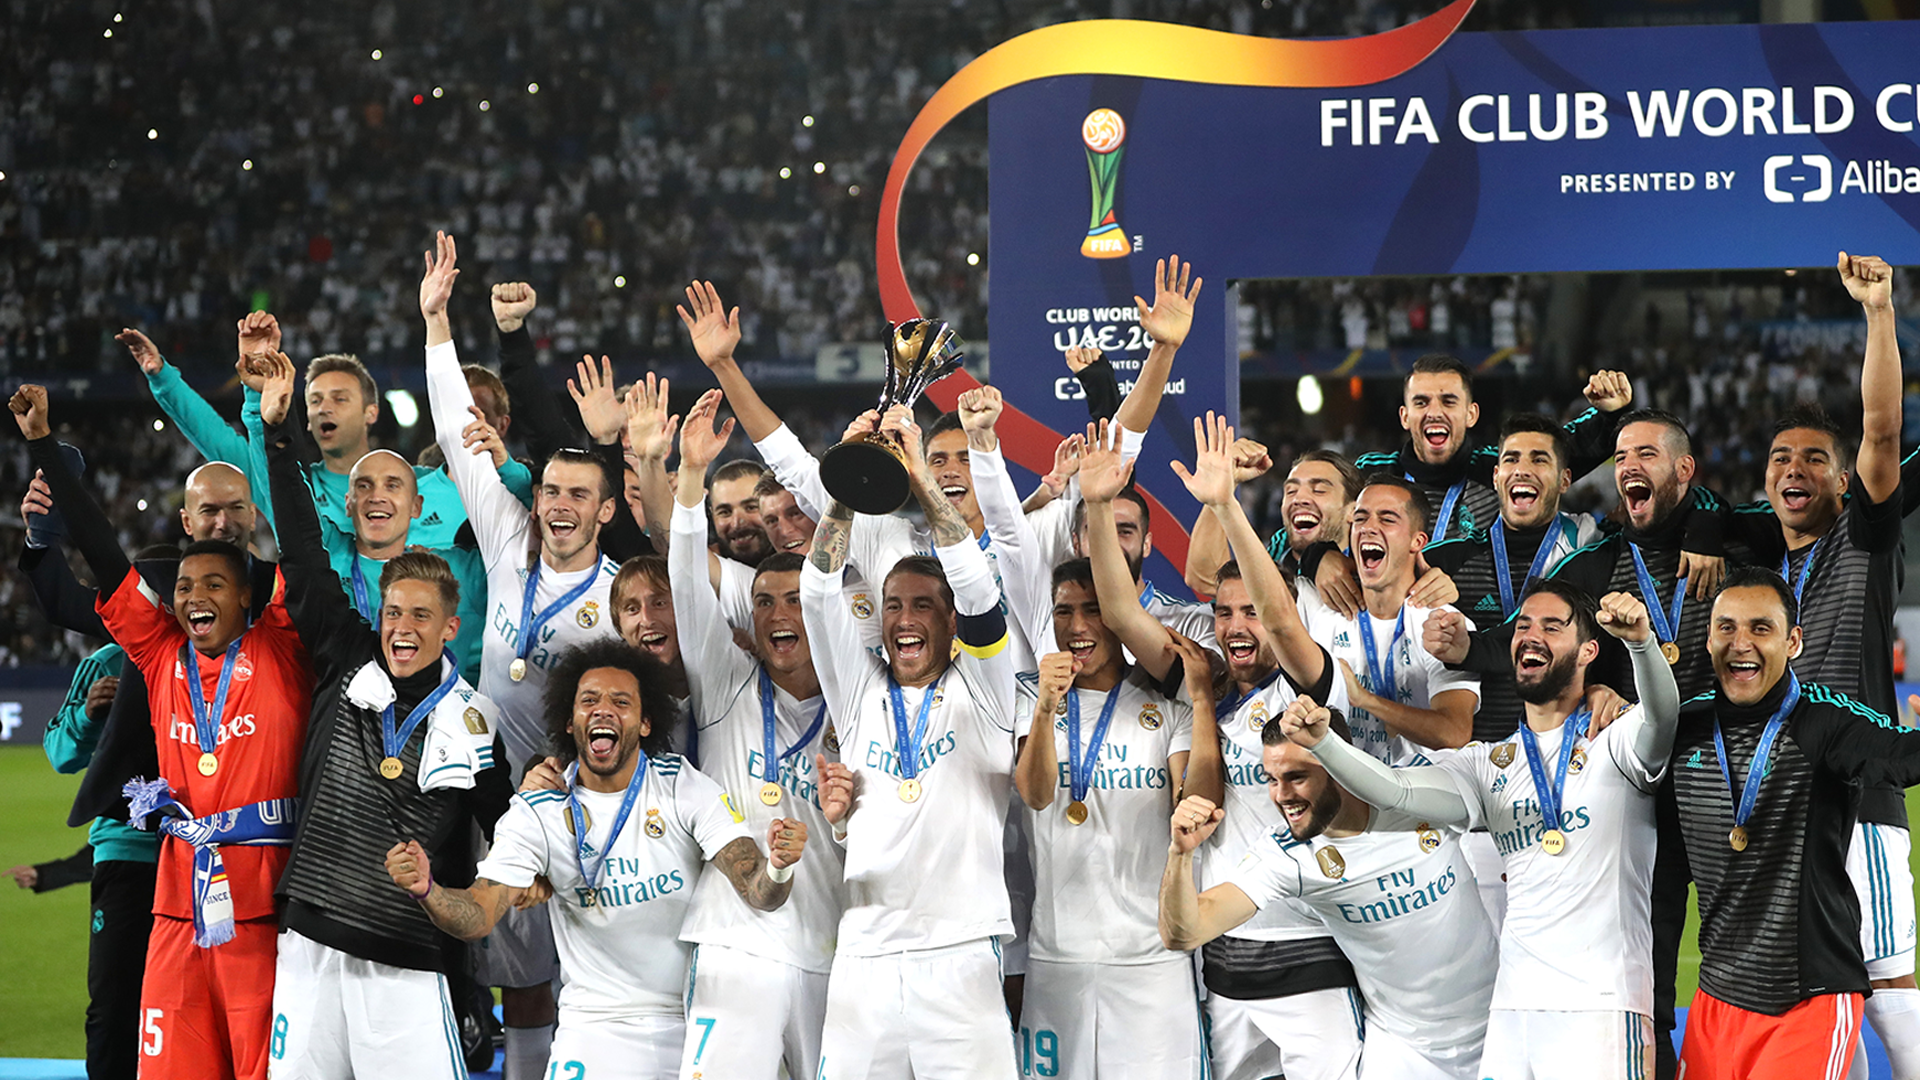 arab club champions cup 2018